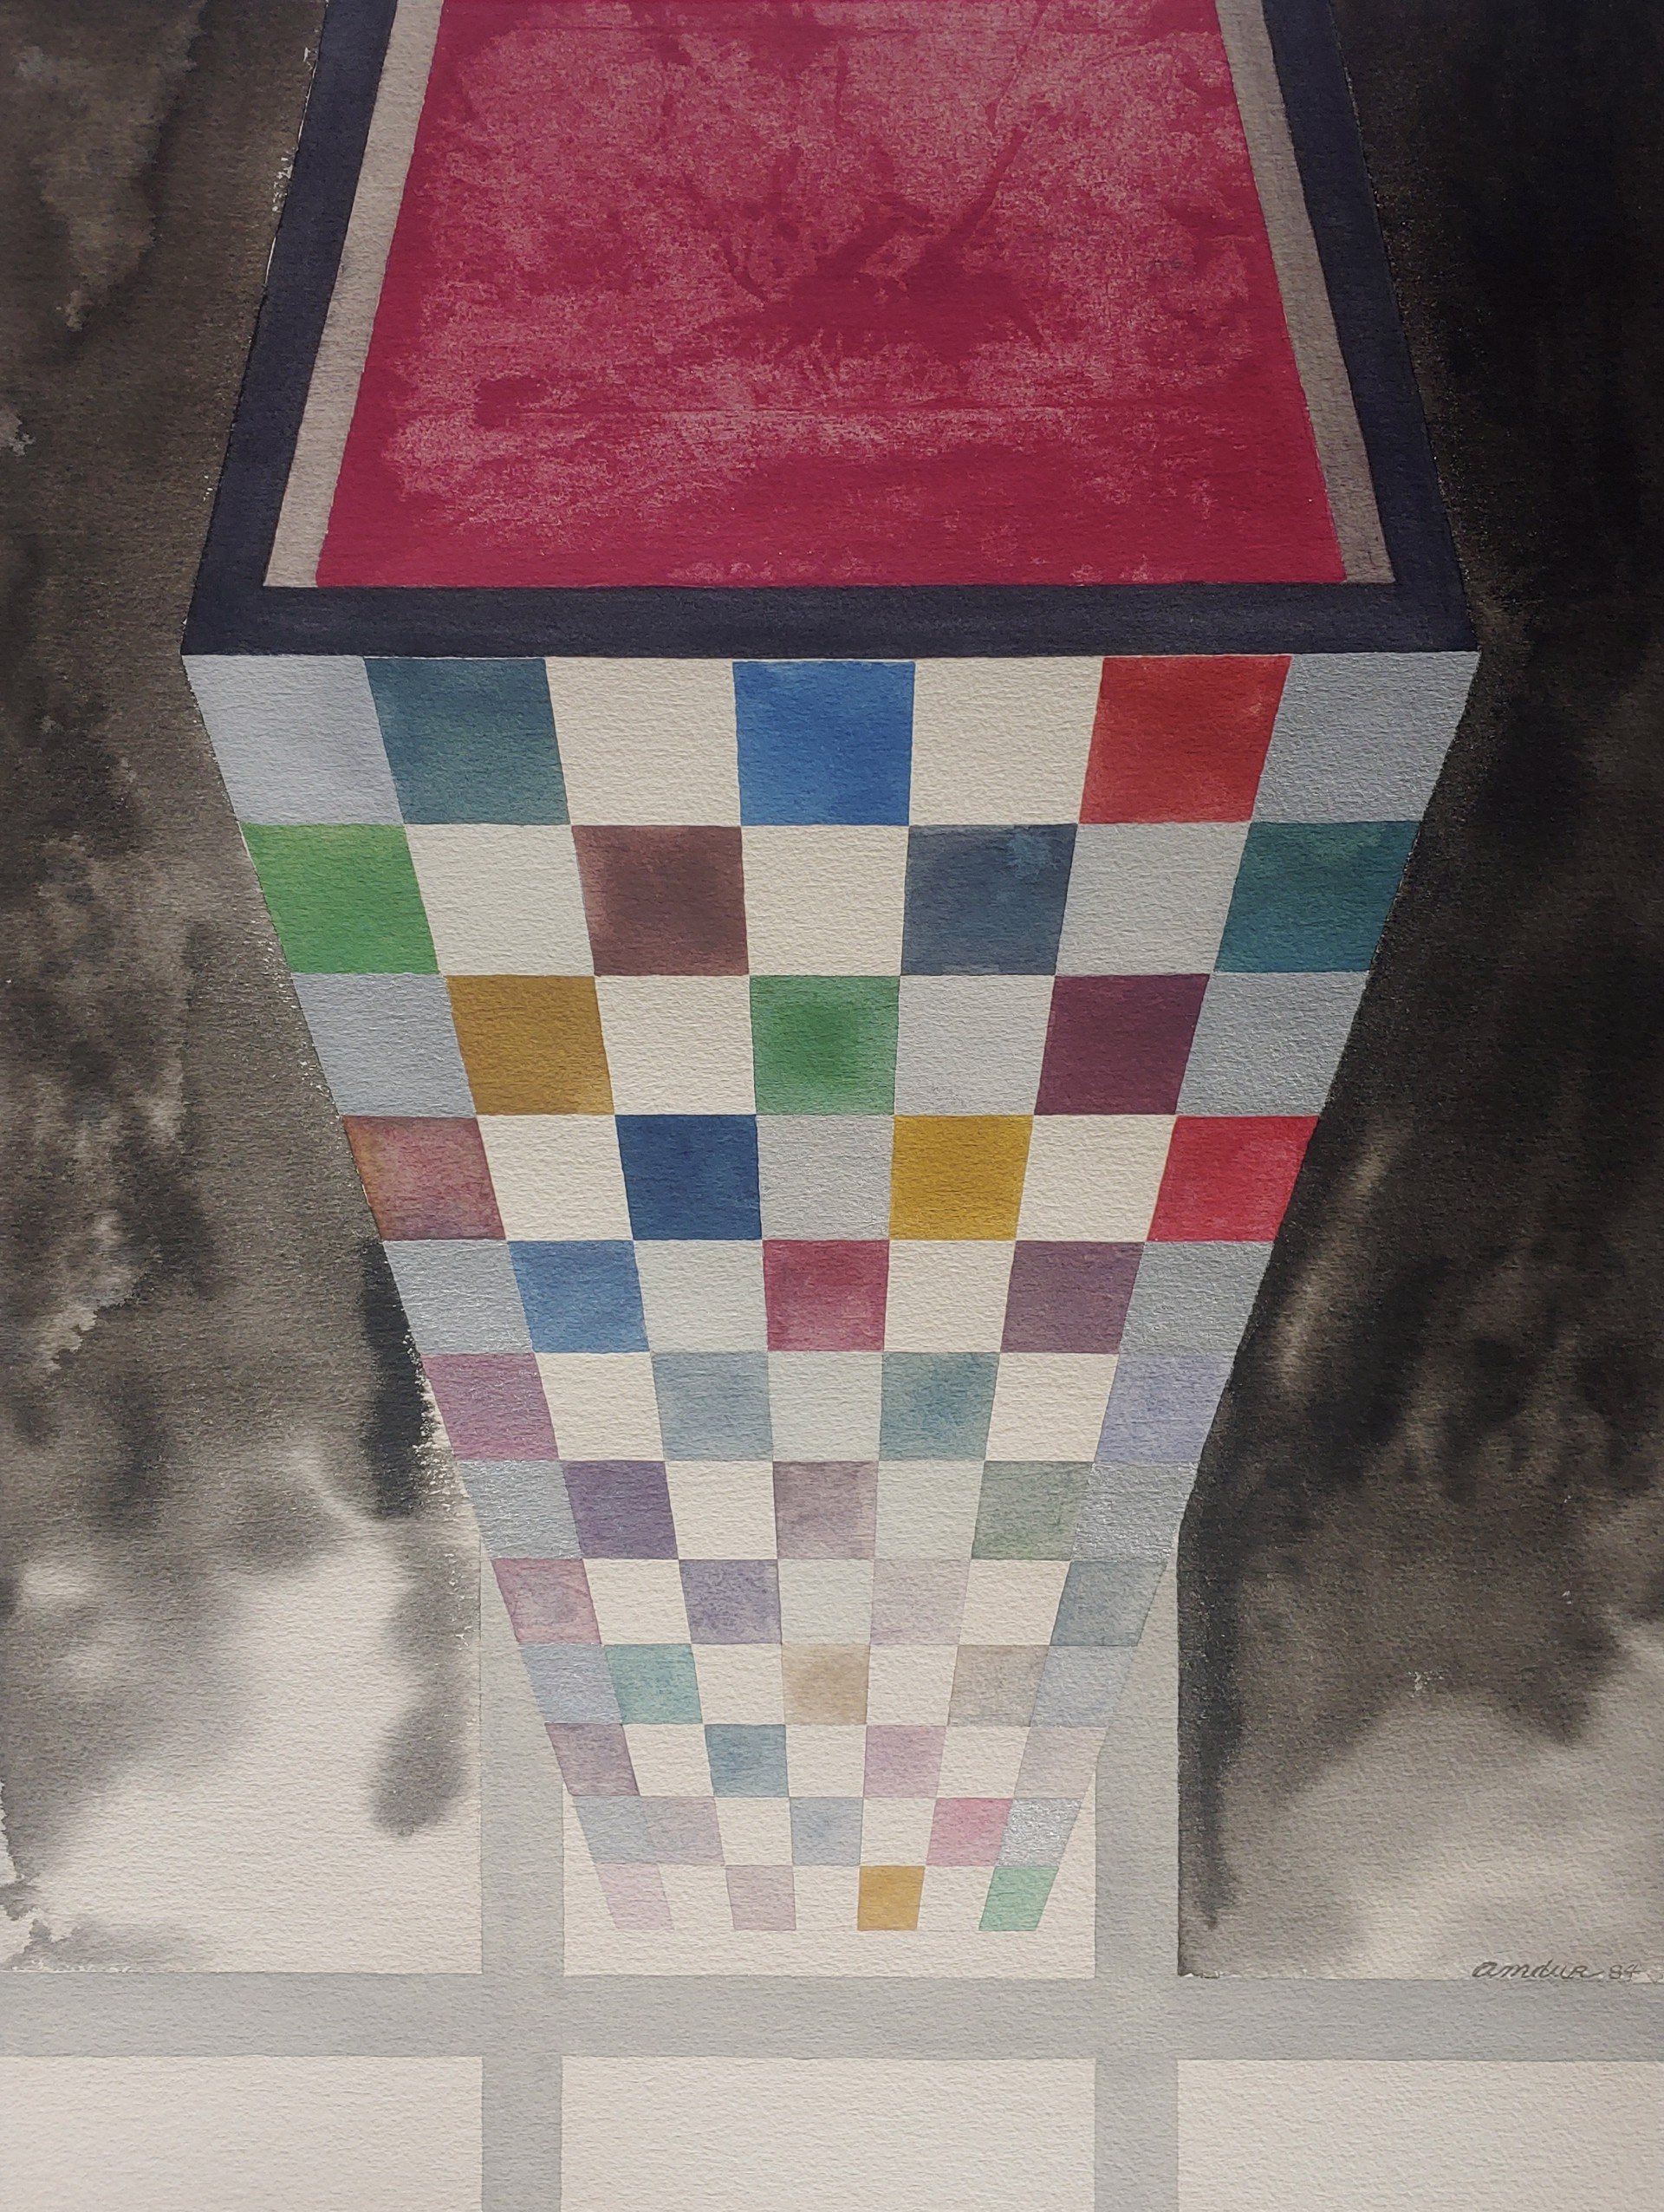 Surreal Watercolor - Checkers by David Amdur